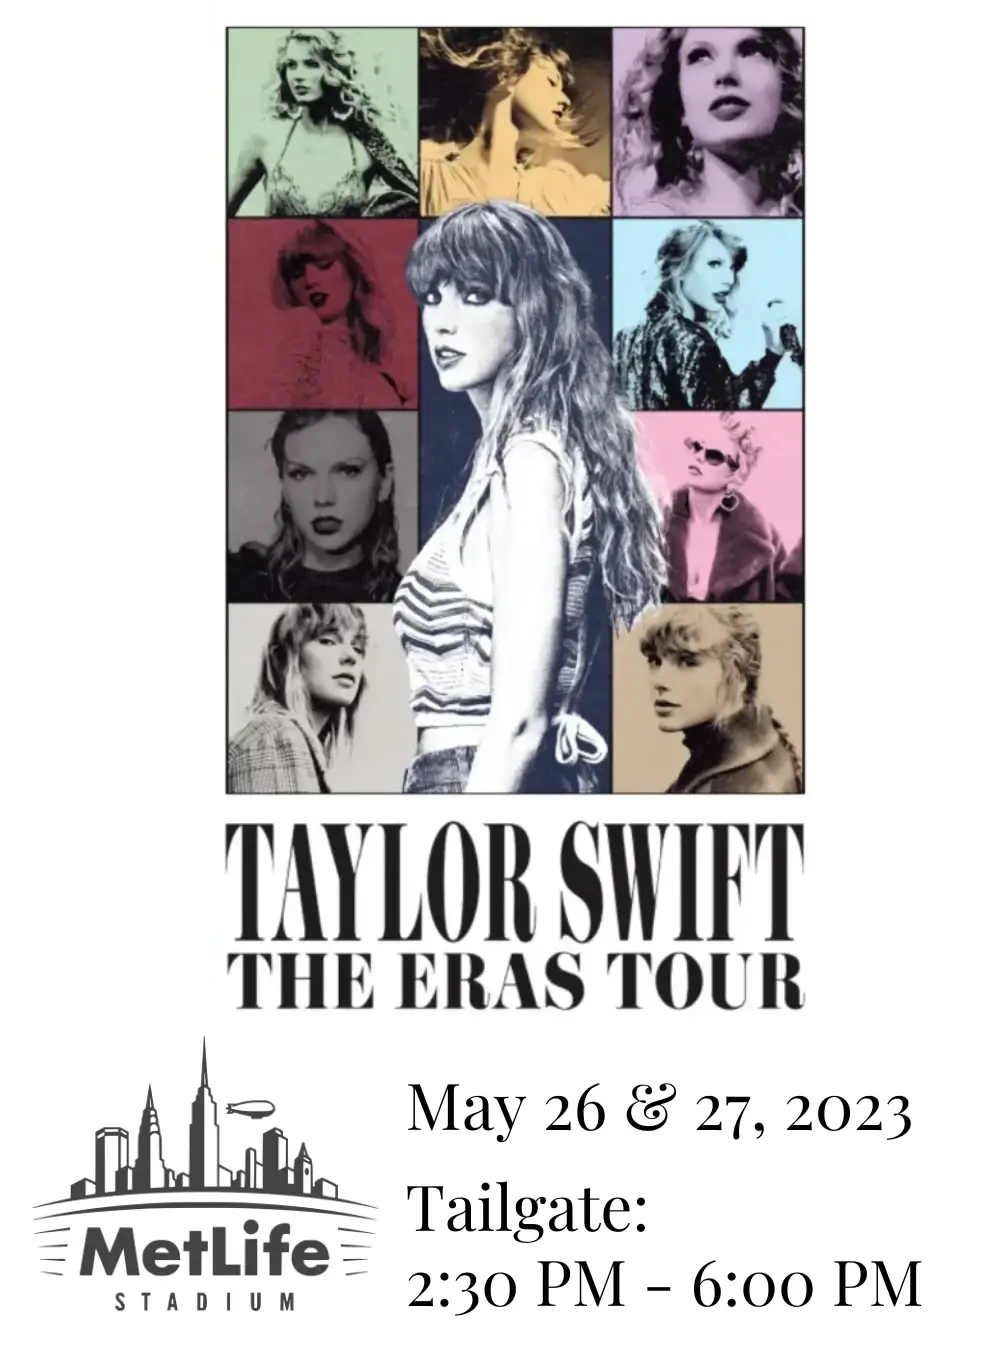 Taylor Swift, "The Eras Tour" MetLife Stadium Tailgate